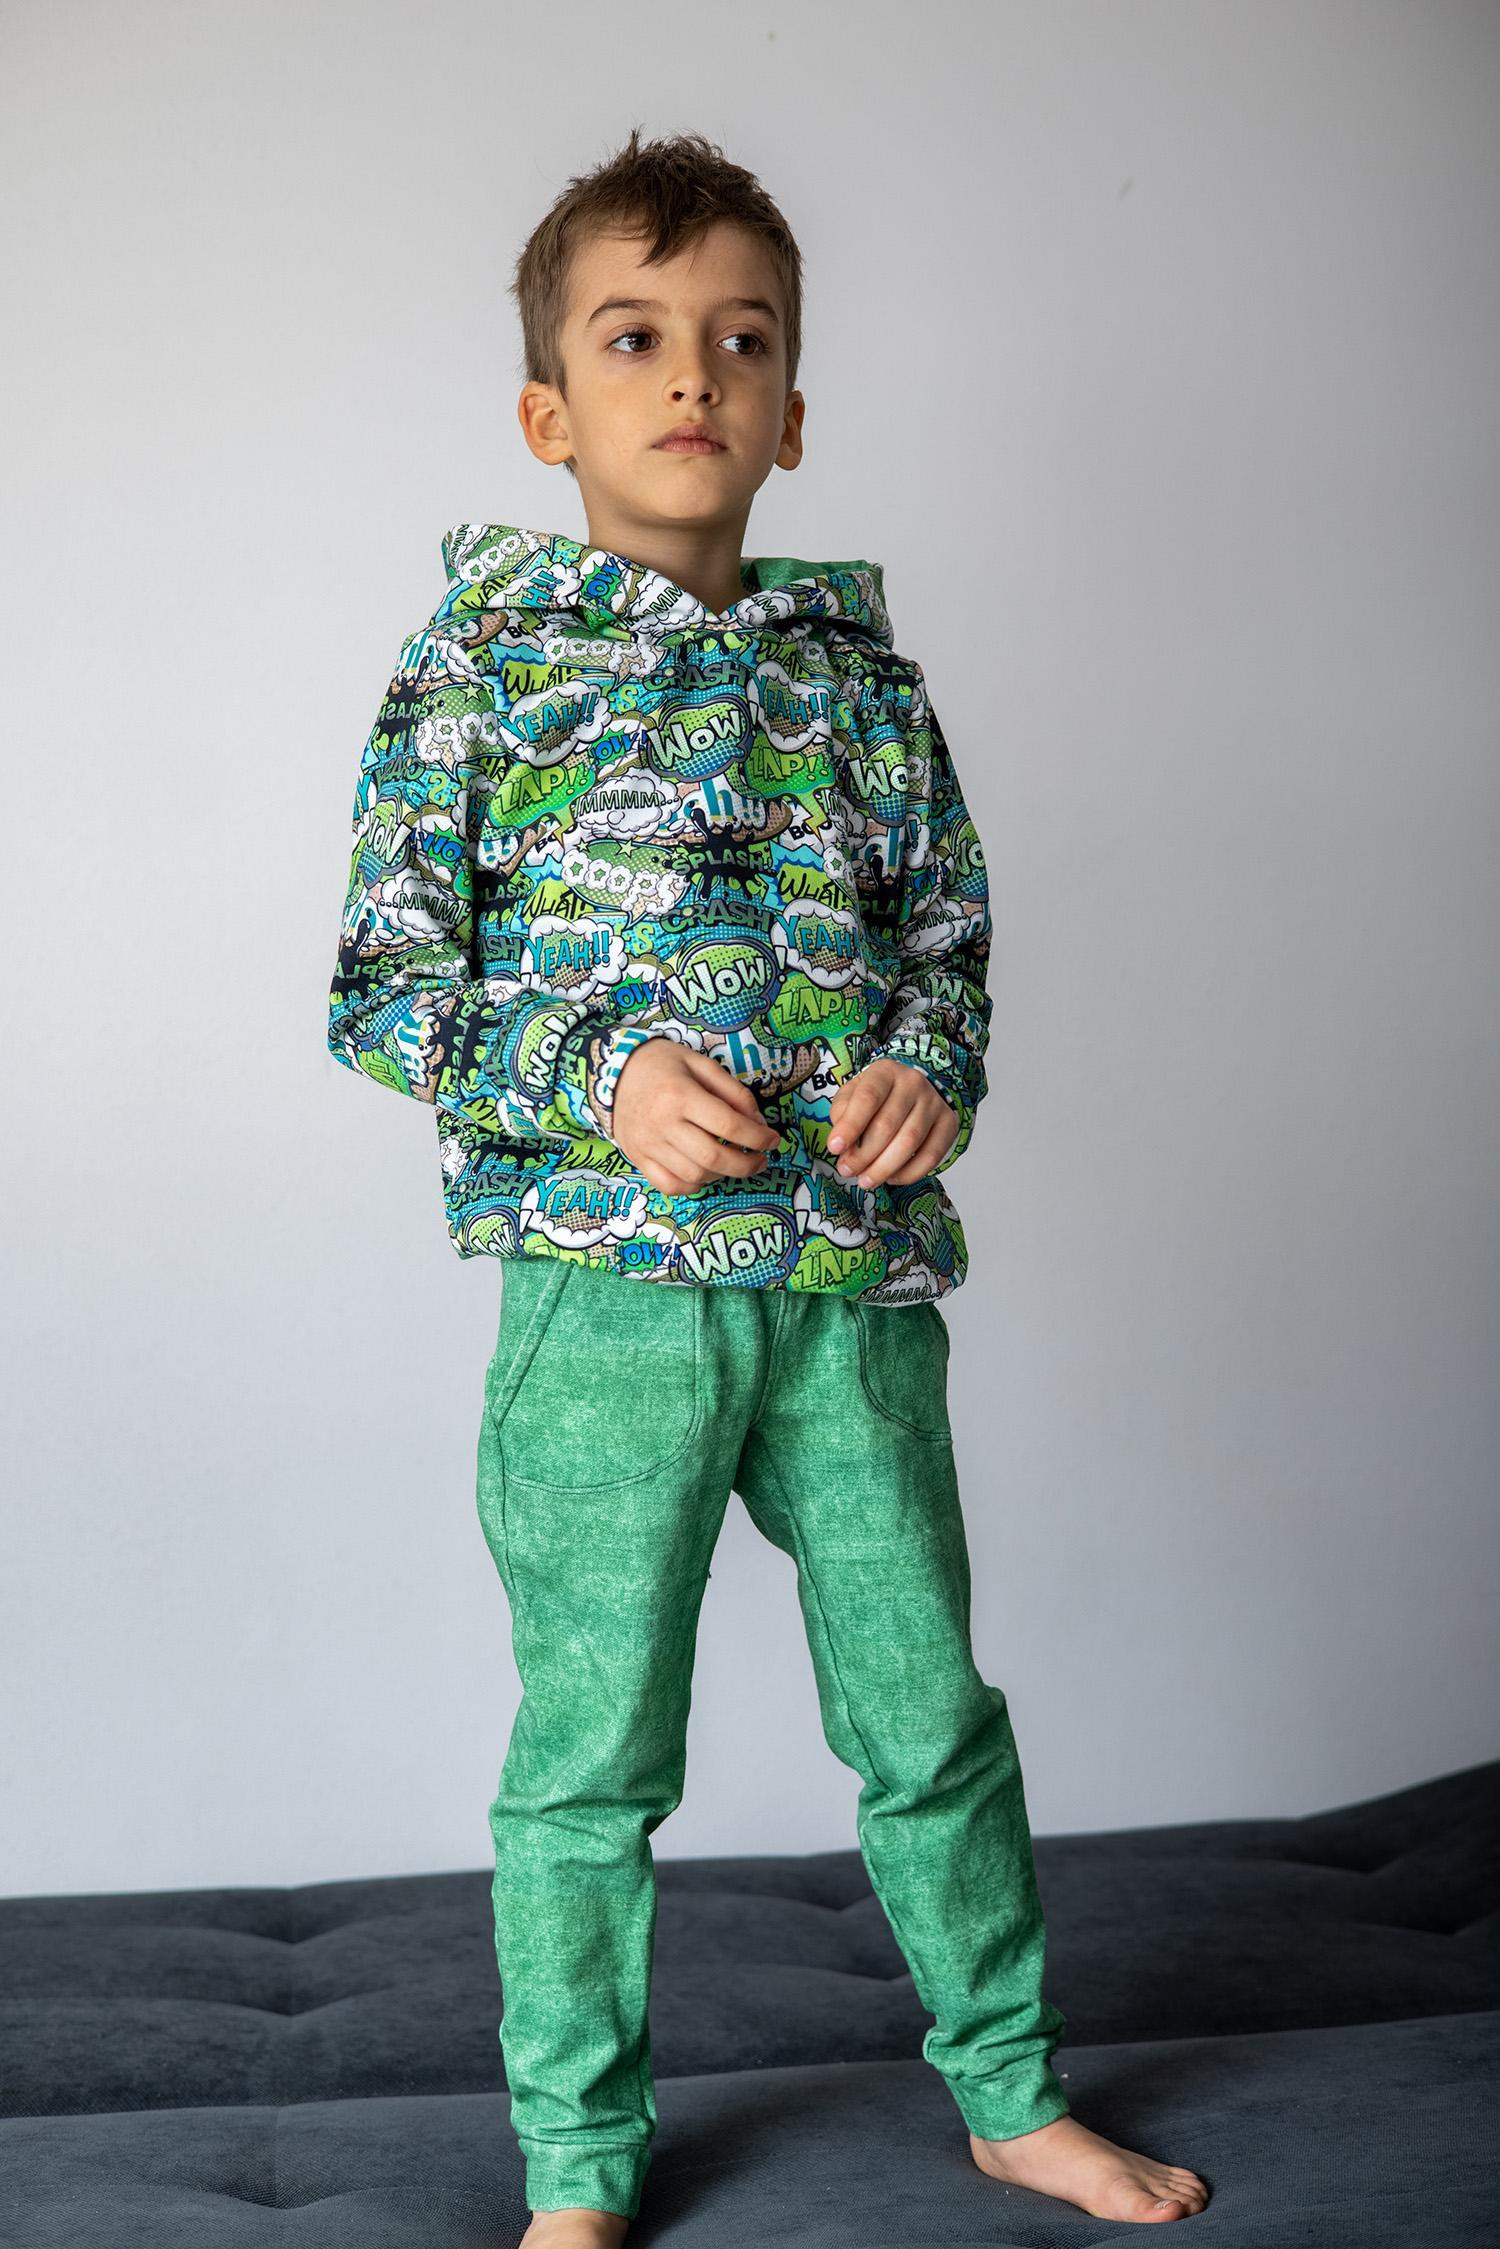 CHILDREN'S JOGGERS (LYON) - ACID WASH / DARK BLUE - looped knit fabric 